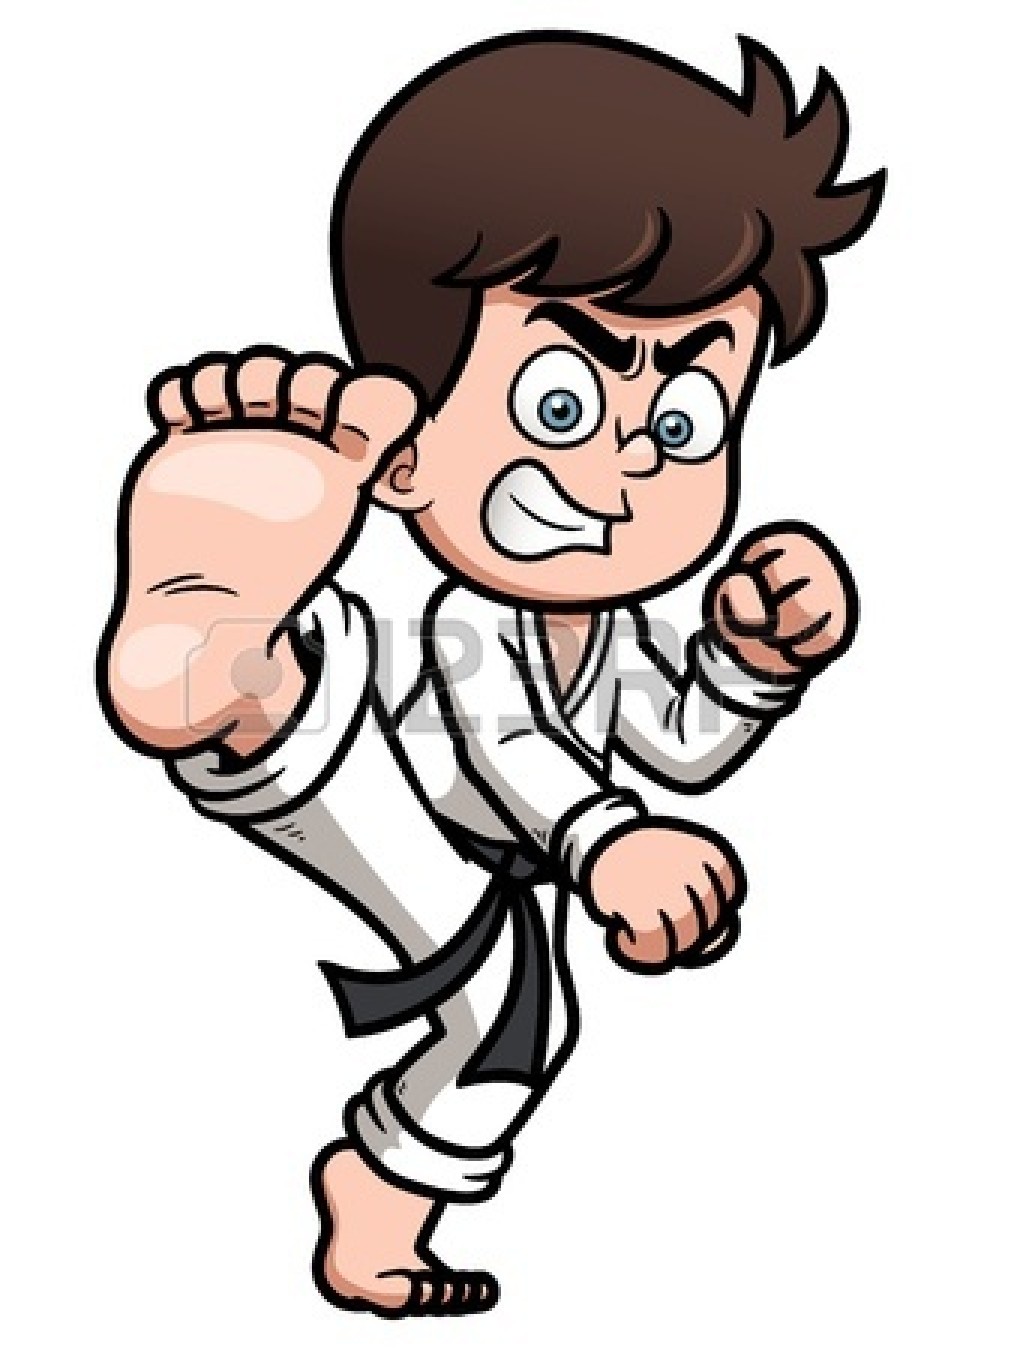 Karate kick clipart.